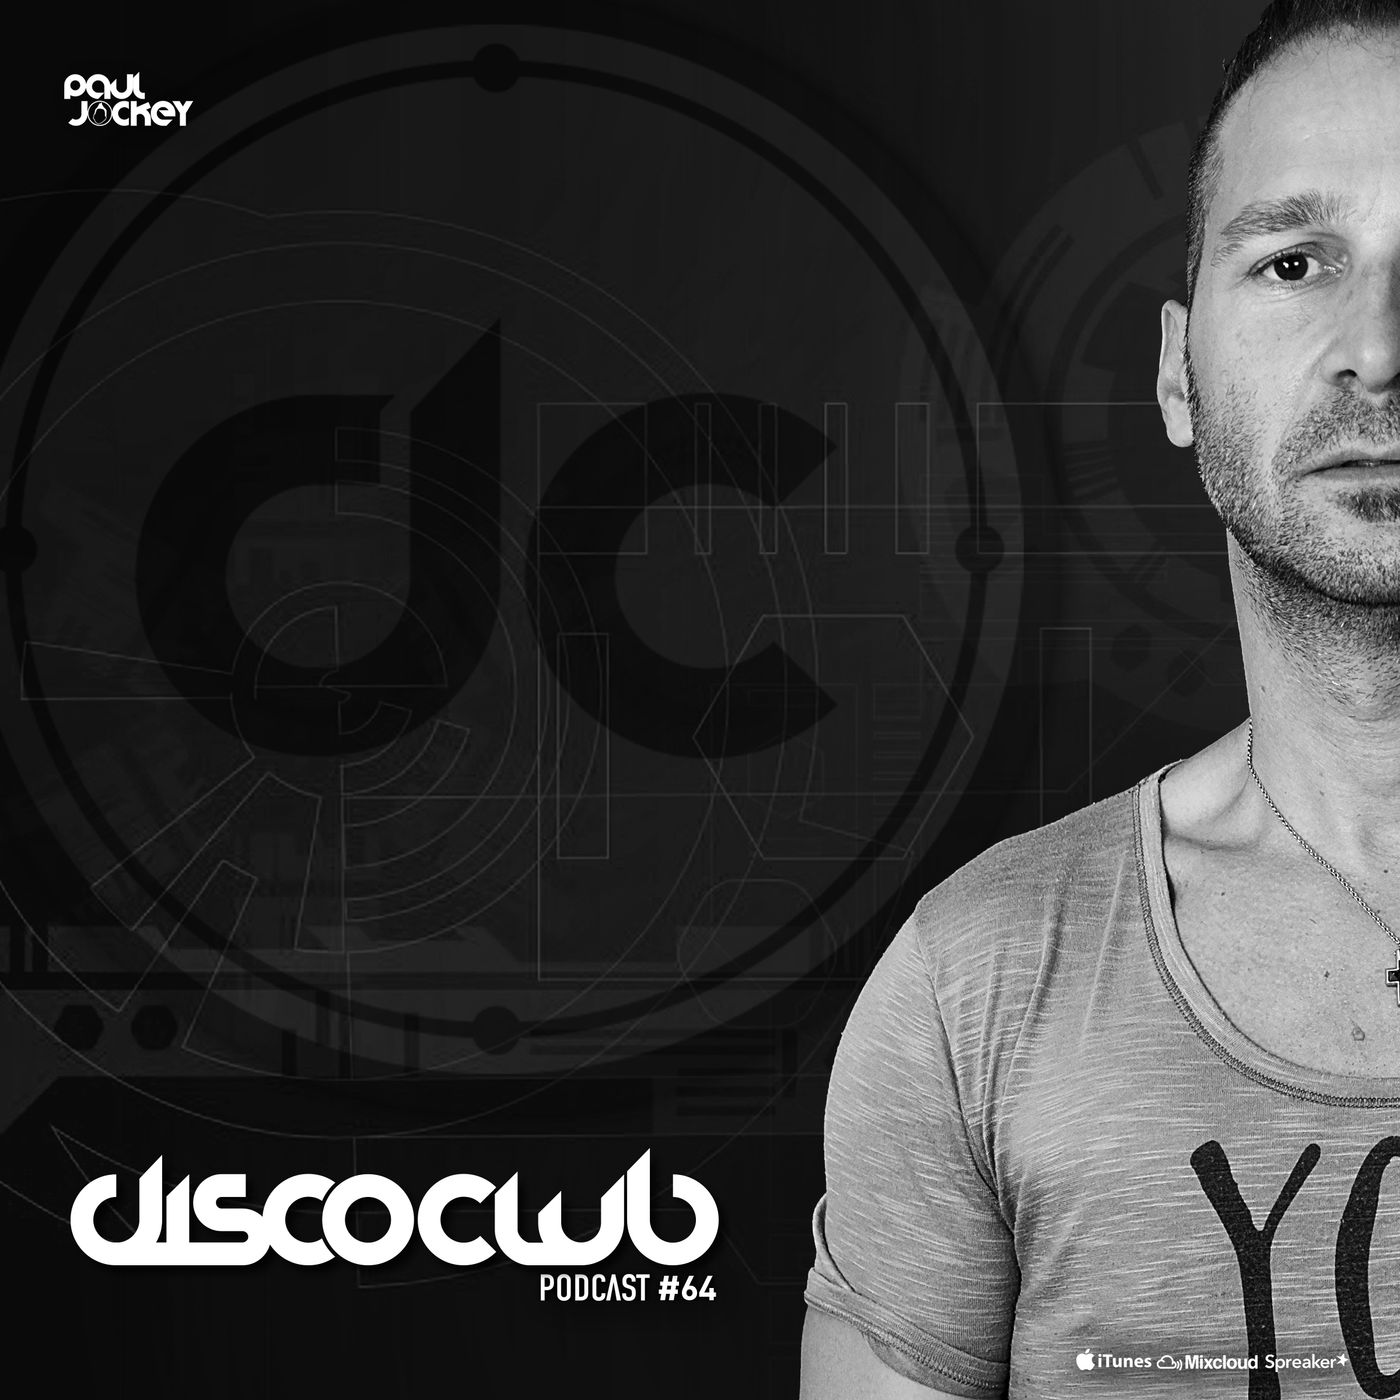 Disco Club - Episode #064